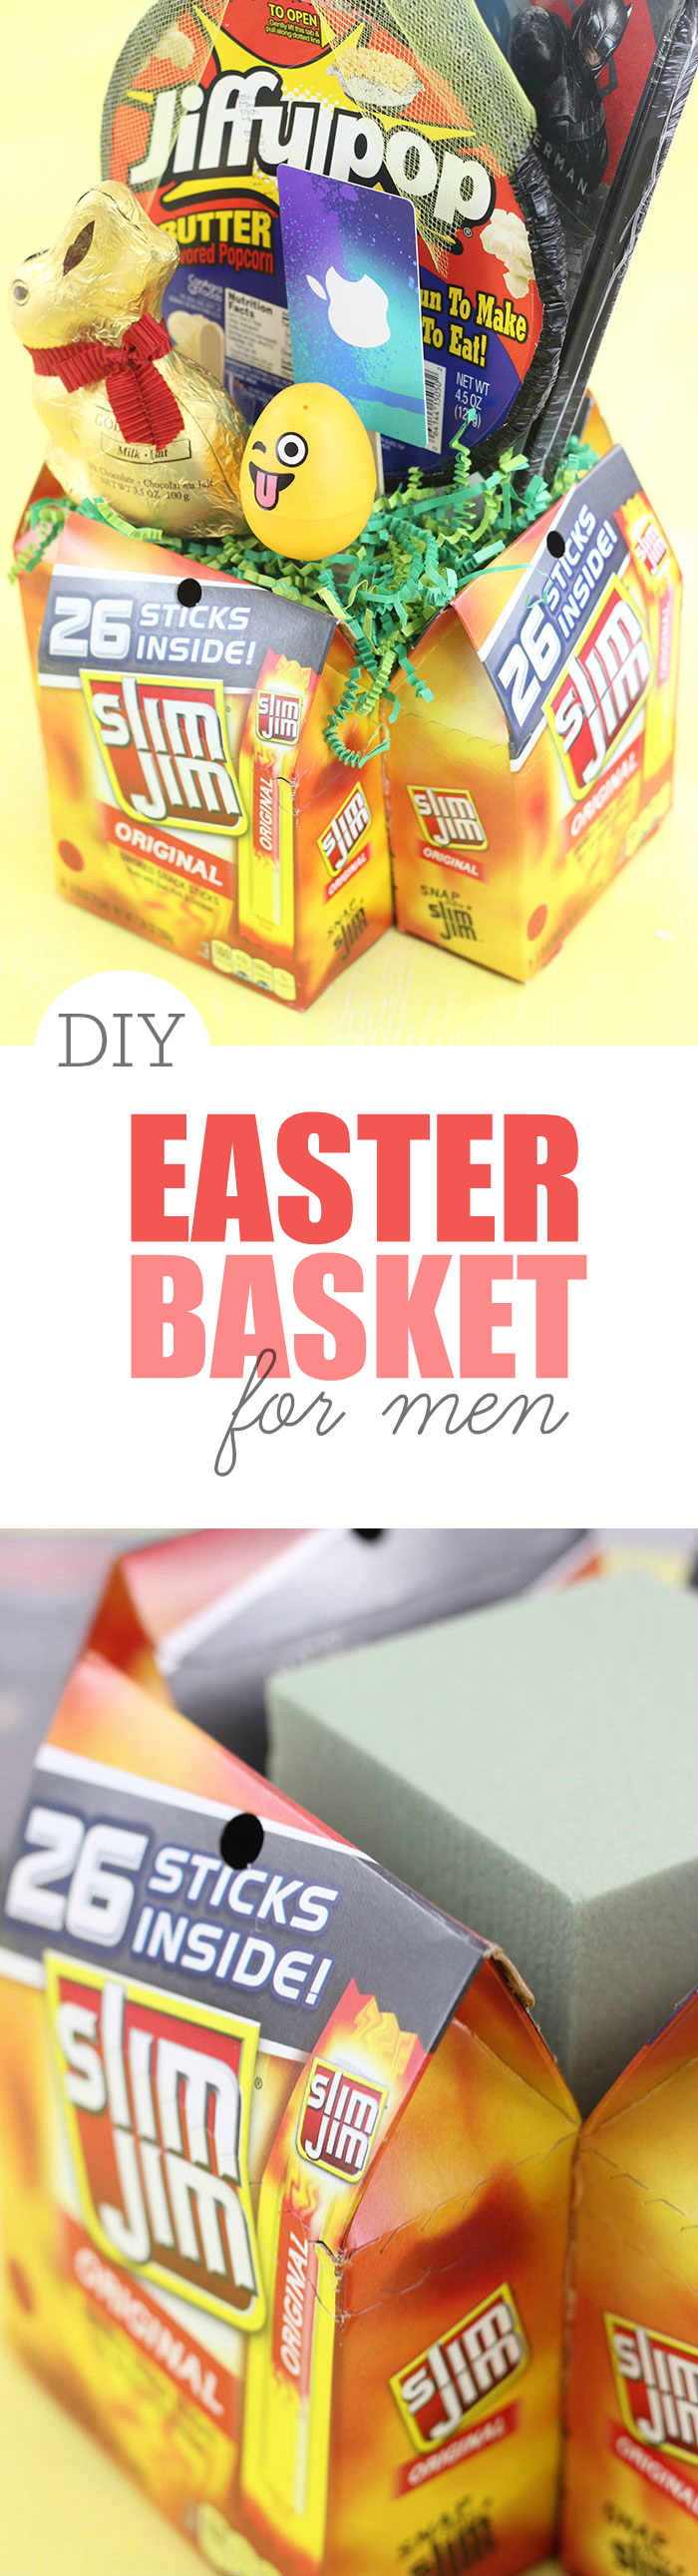 DIY Easter Basket For Men. Use Slim Jim packages and cardboard to make your own basket.